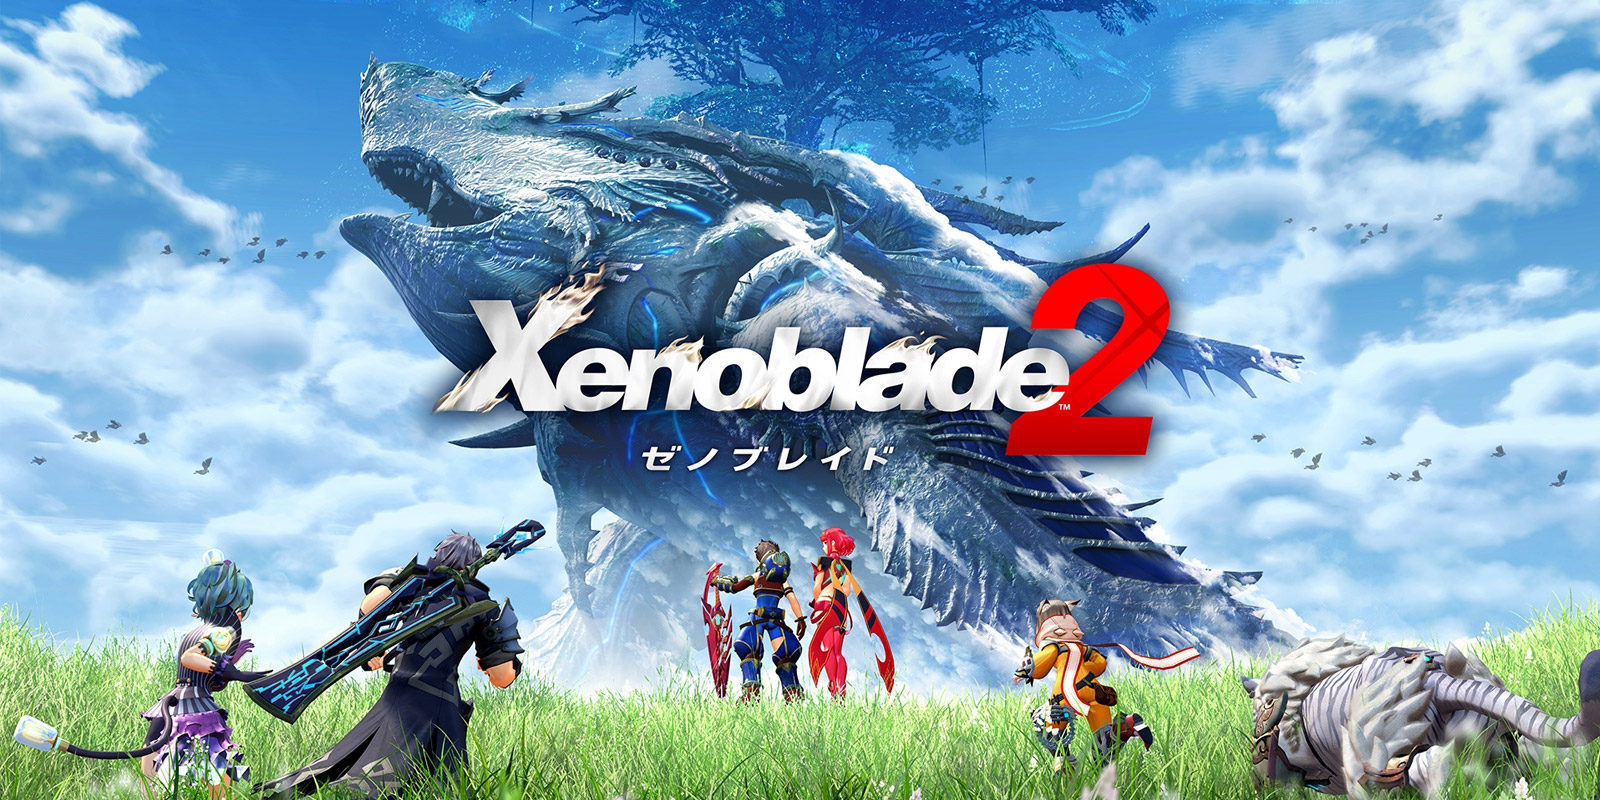 Análisis: 'Xenoblade Chronicles 2' para Nintendo Switch, de vuelta a los personajes con historia